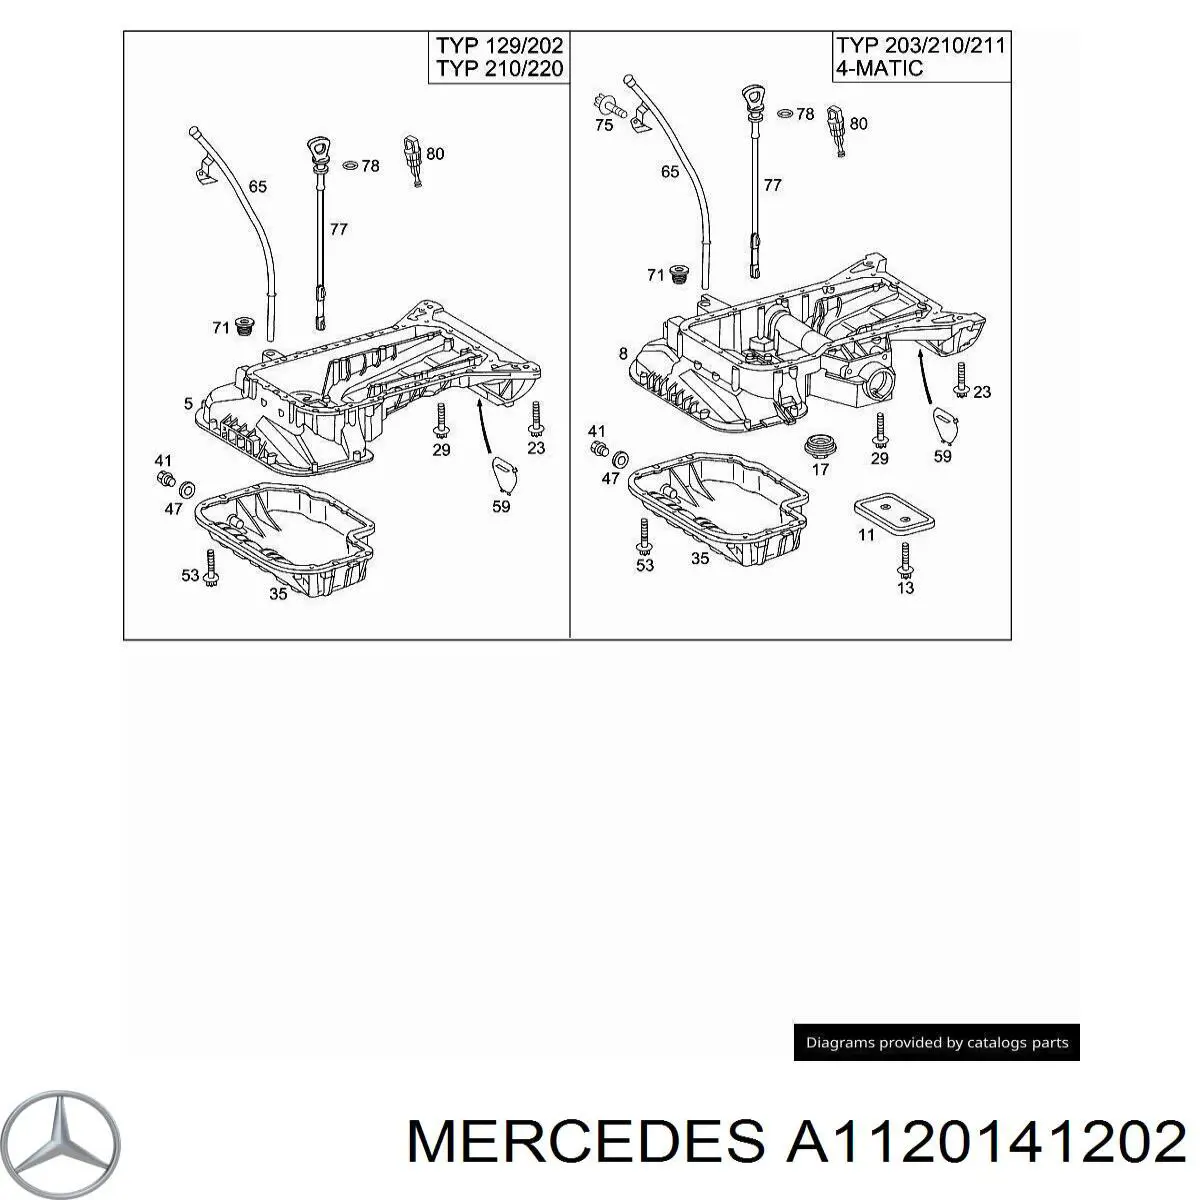 A1120141202 Mercedes піддон масляний картера двигуна, верхня частина